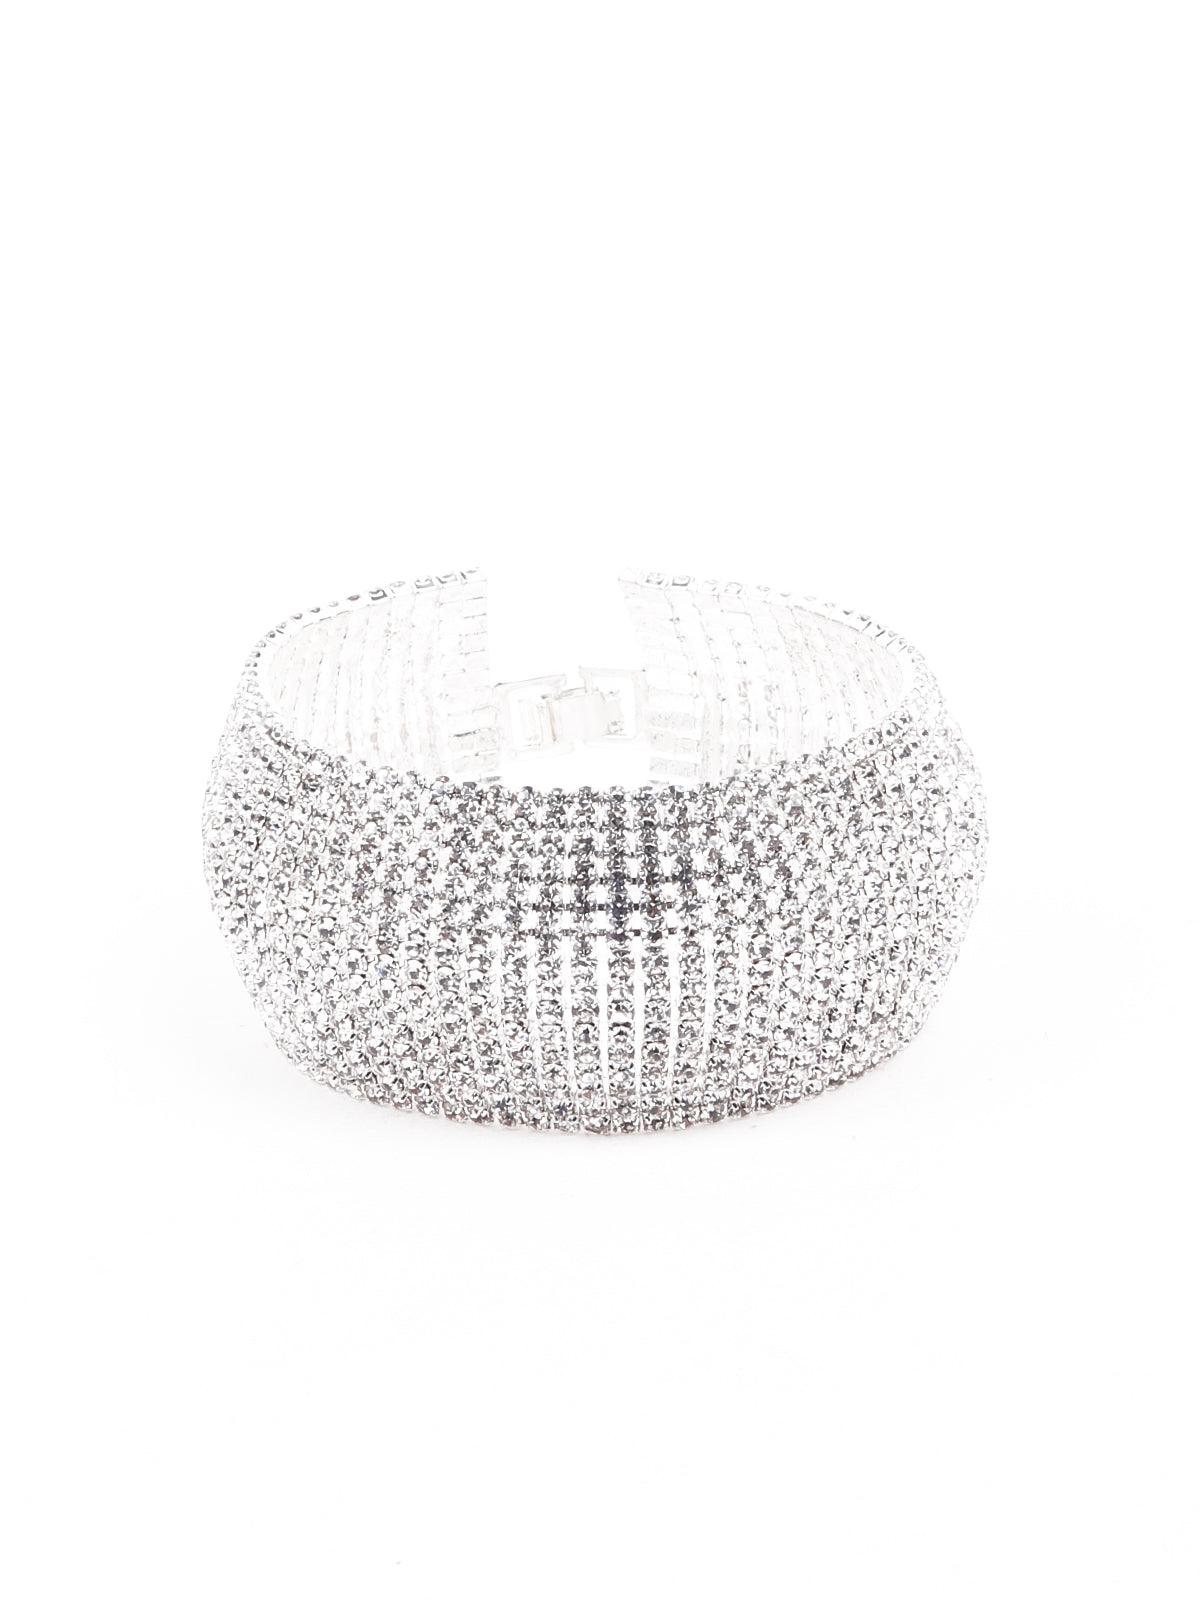 Women's Artificial Diamond-Studded Statement Bracelet - Odette